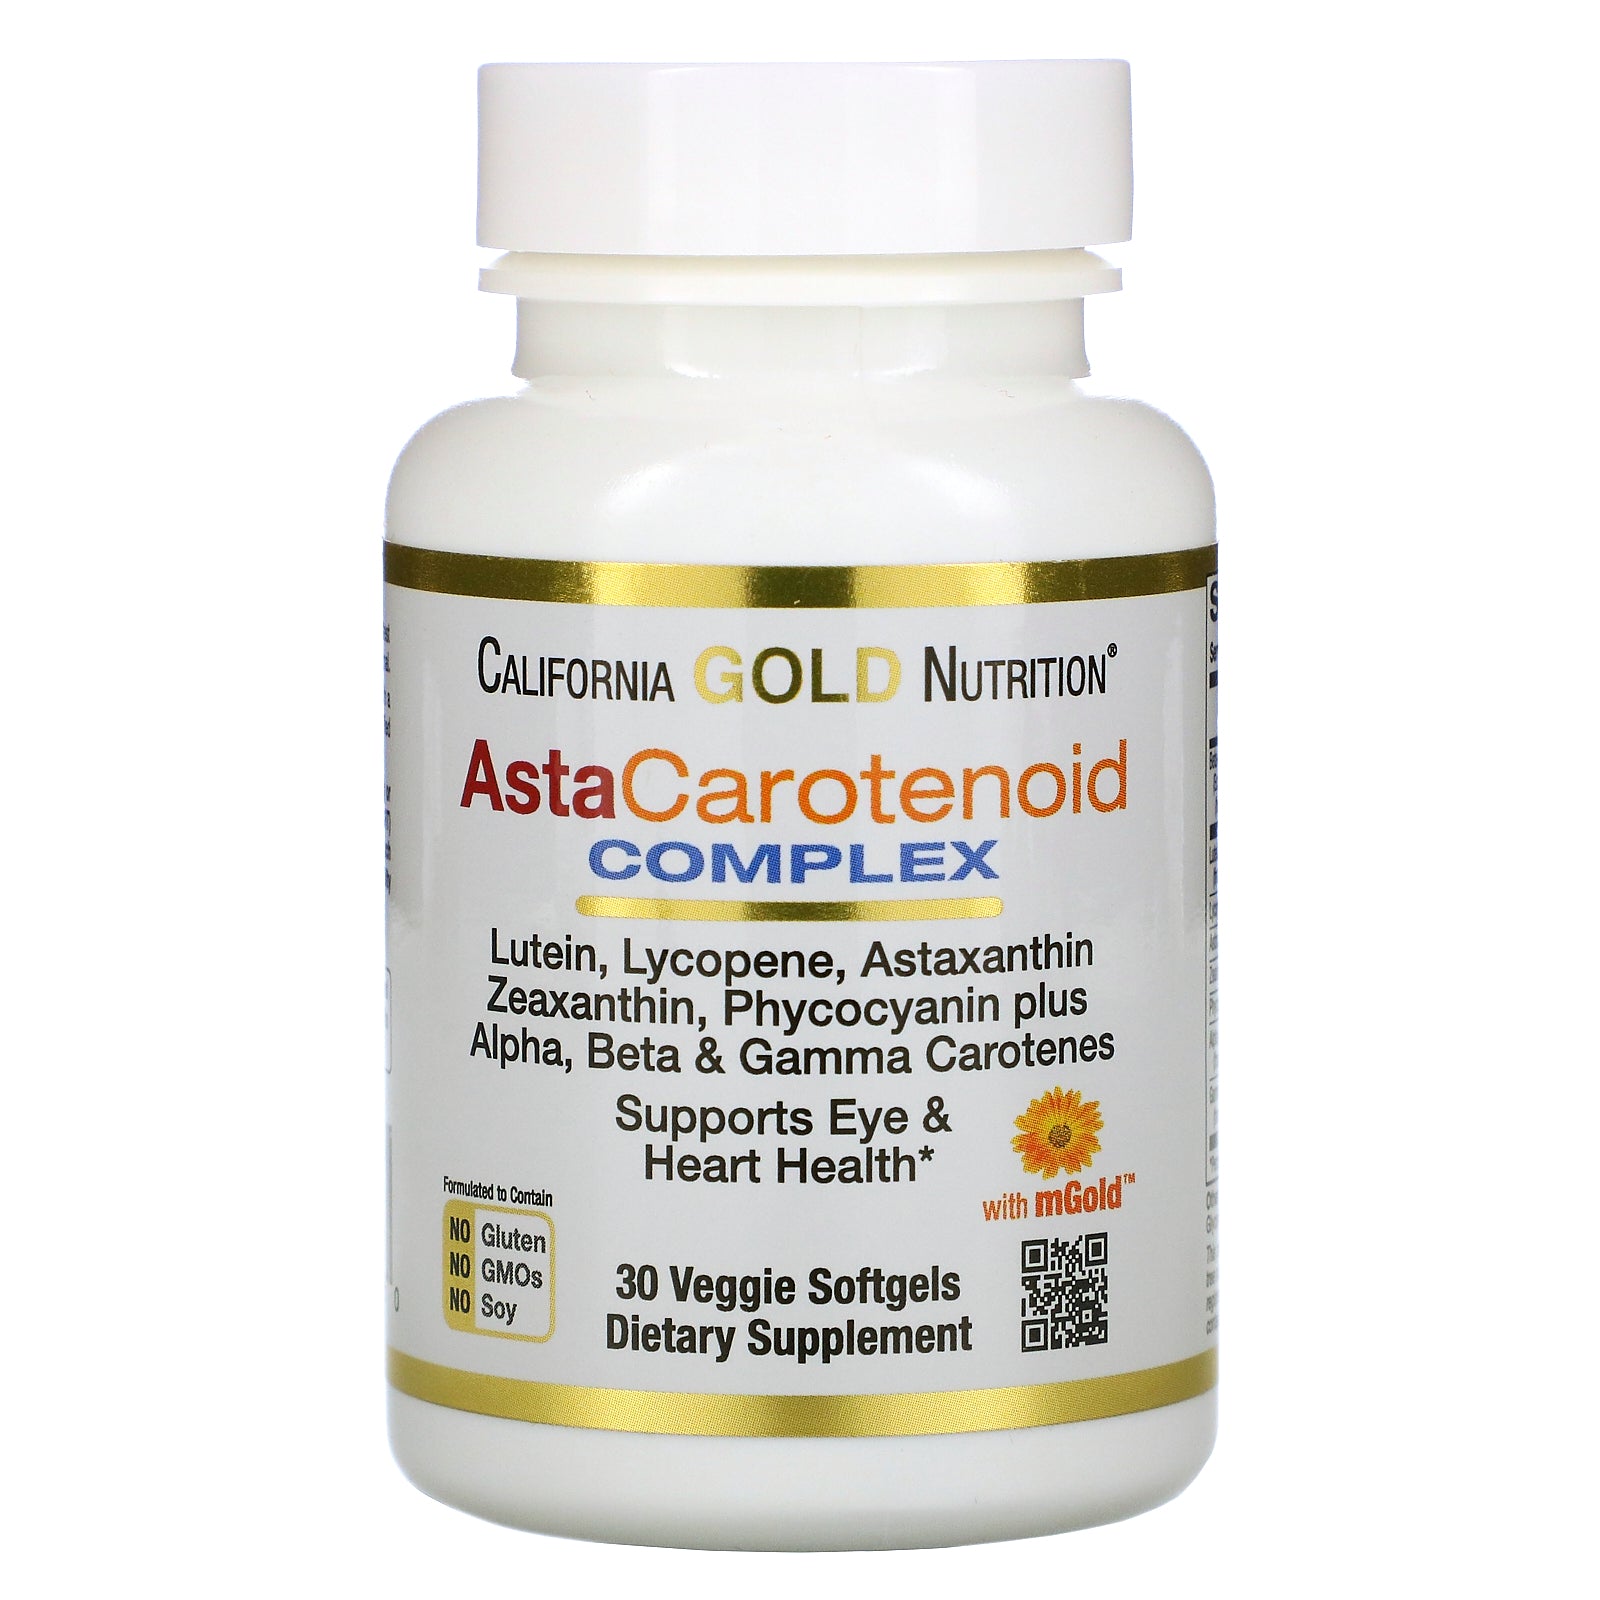 California Gold Nutrition, AstaCarotenoid Complex, Lutein, Lycopene, Astaxanthin Complex, 30 Veggie Softgels